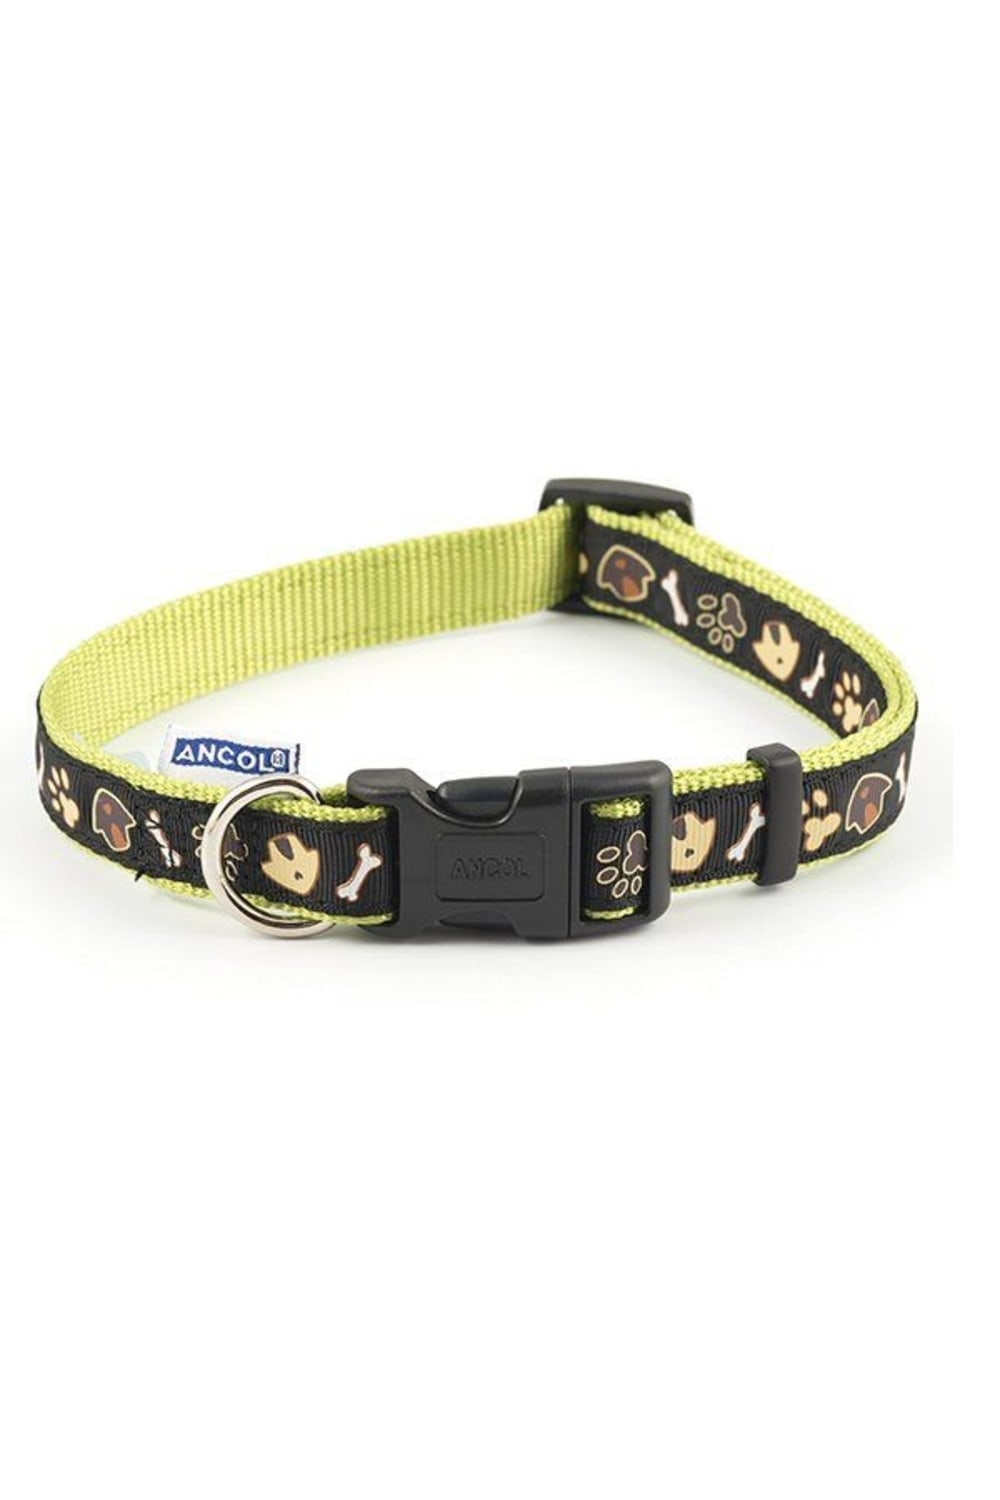 Ancol Nylon Dog & Kennel Collar (Black/Green) (11.8-19.6in)